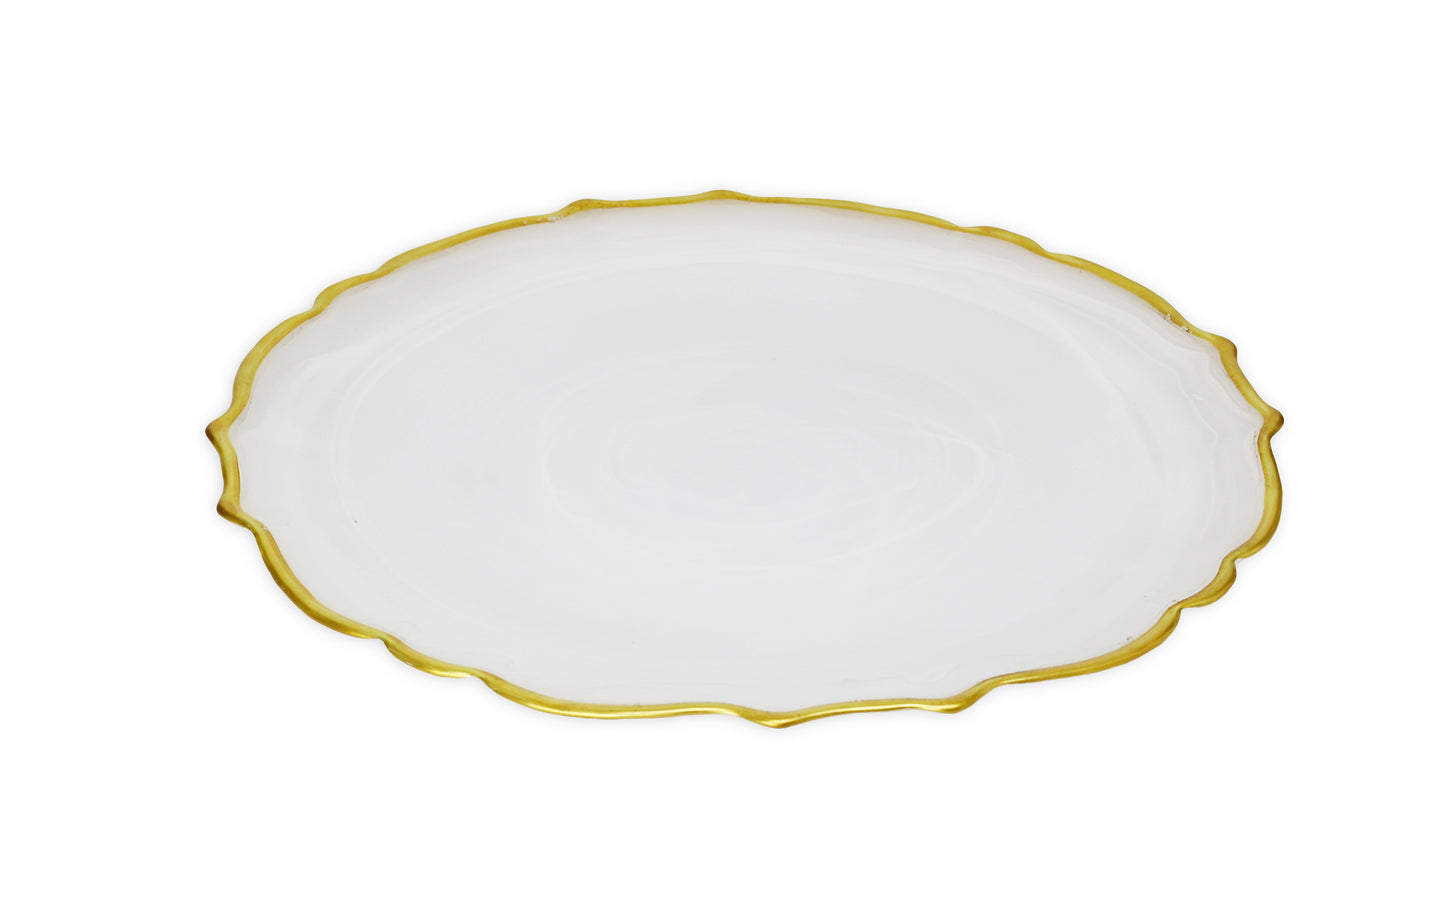 Set of 4 Plates - Alabaster white